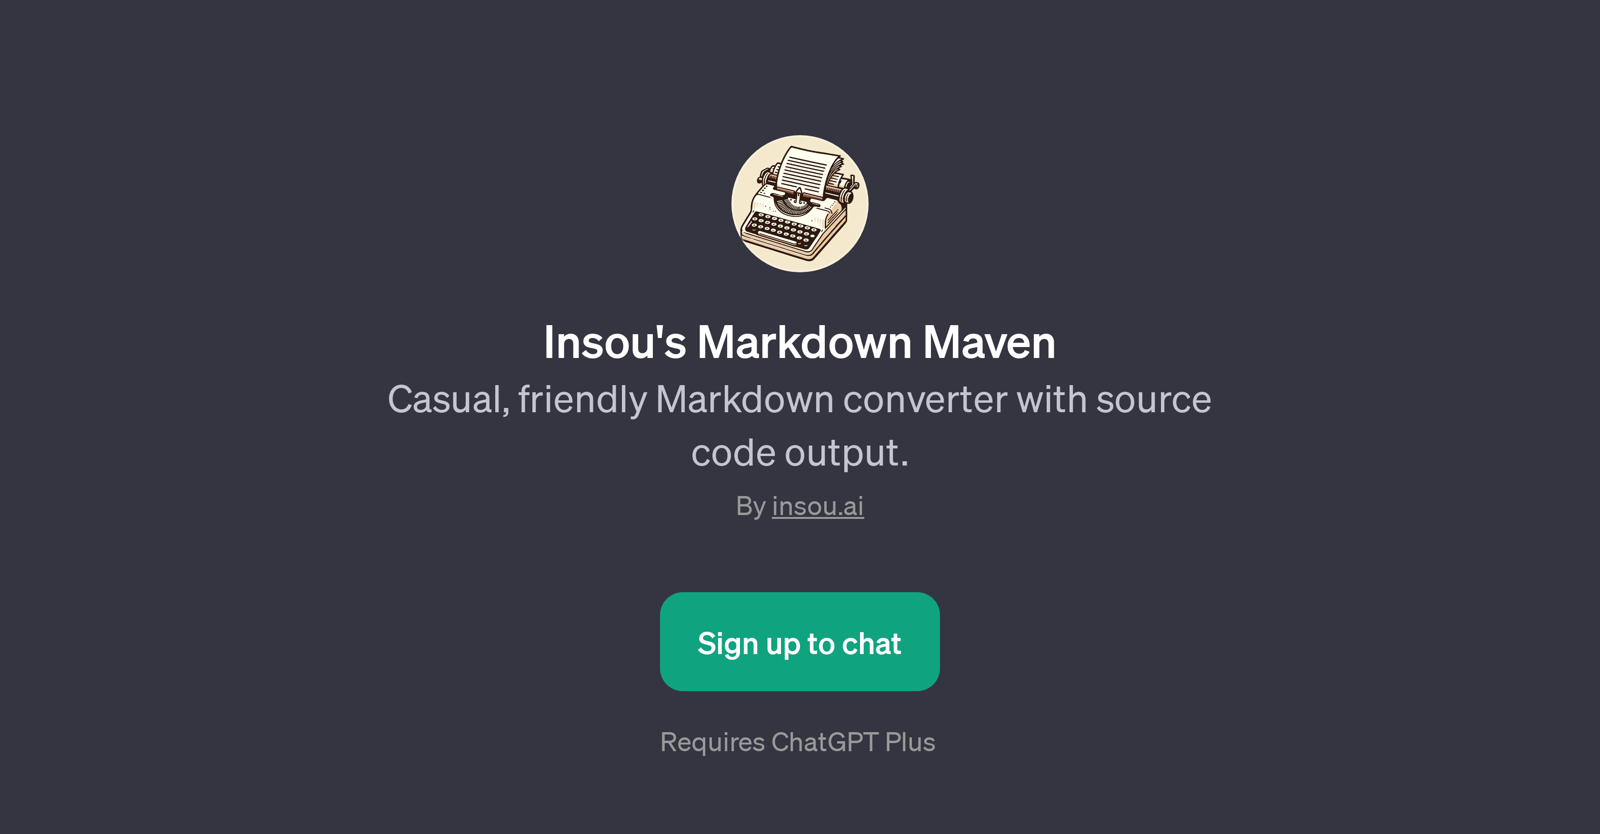 Insou's Markdown Maven website